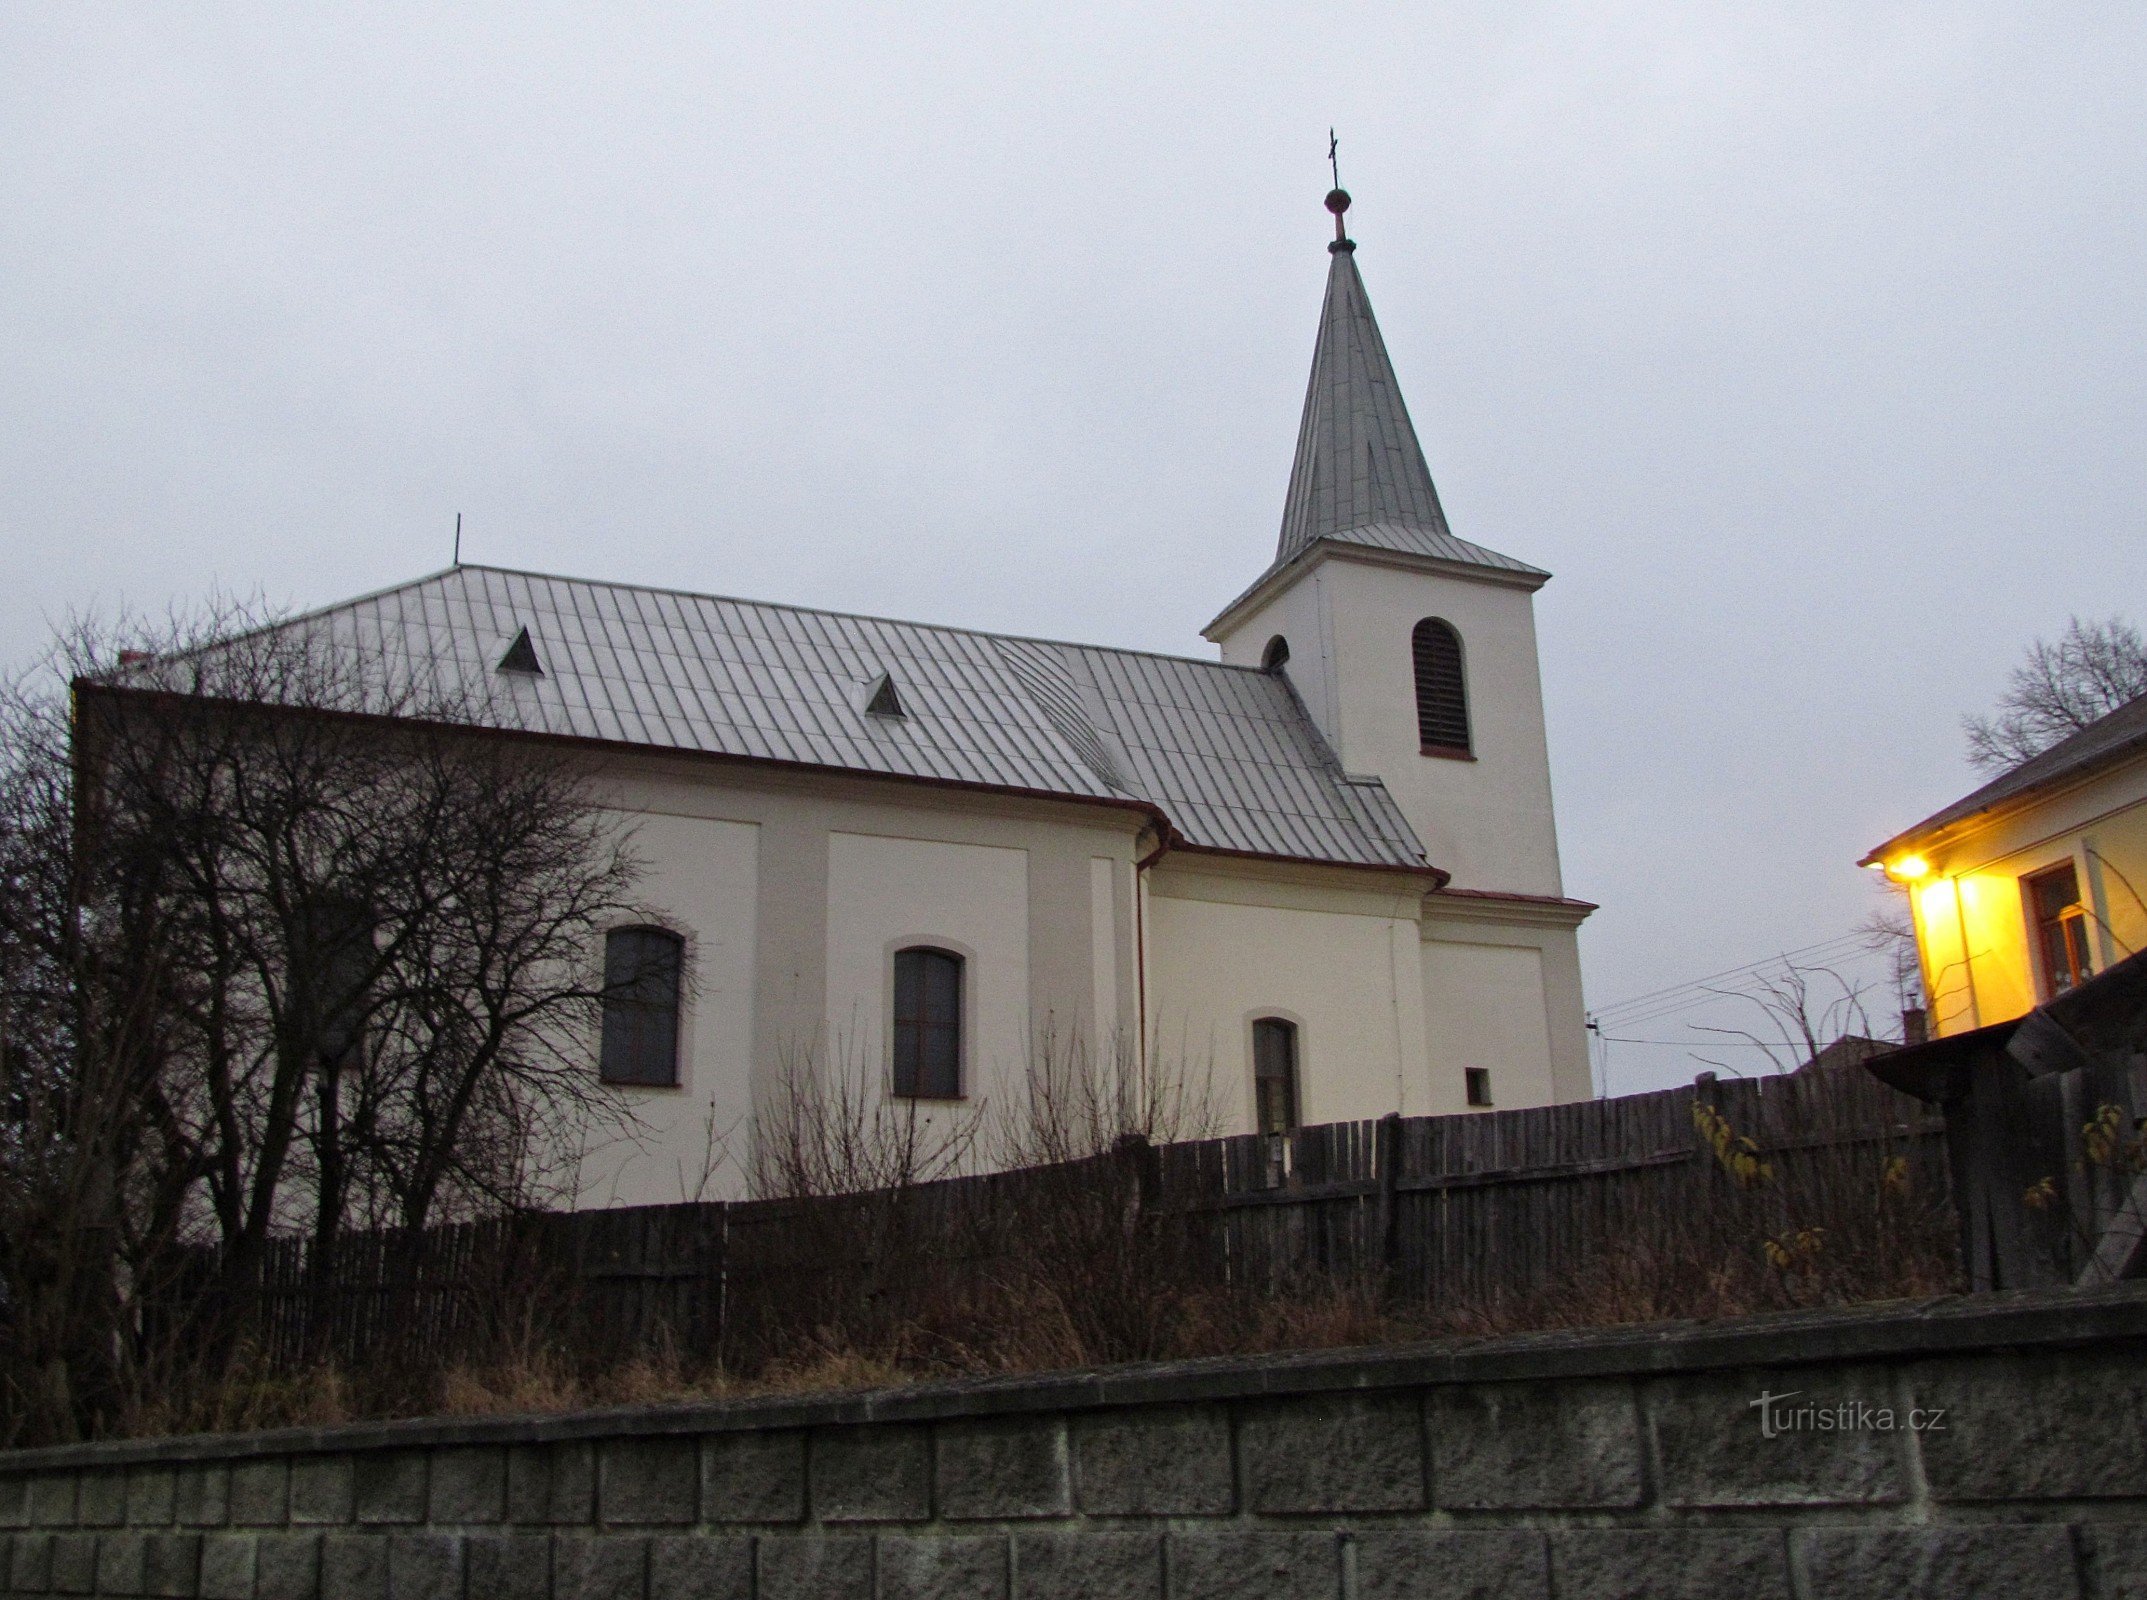 Rostín - parish church of St. Anna